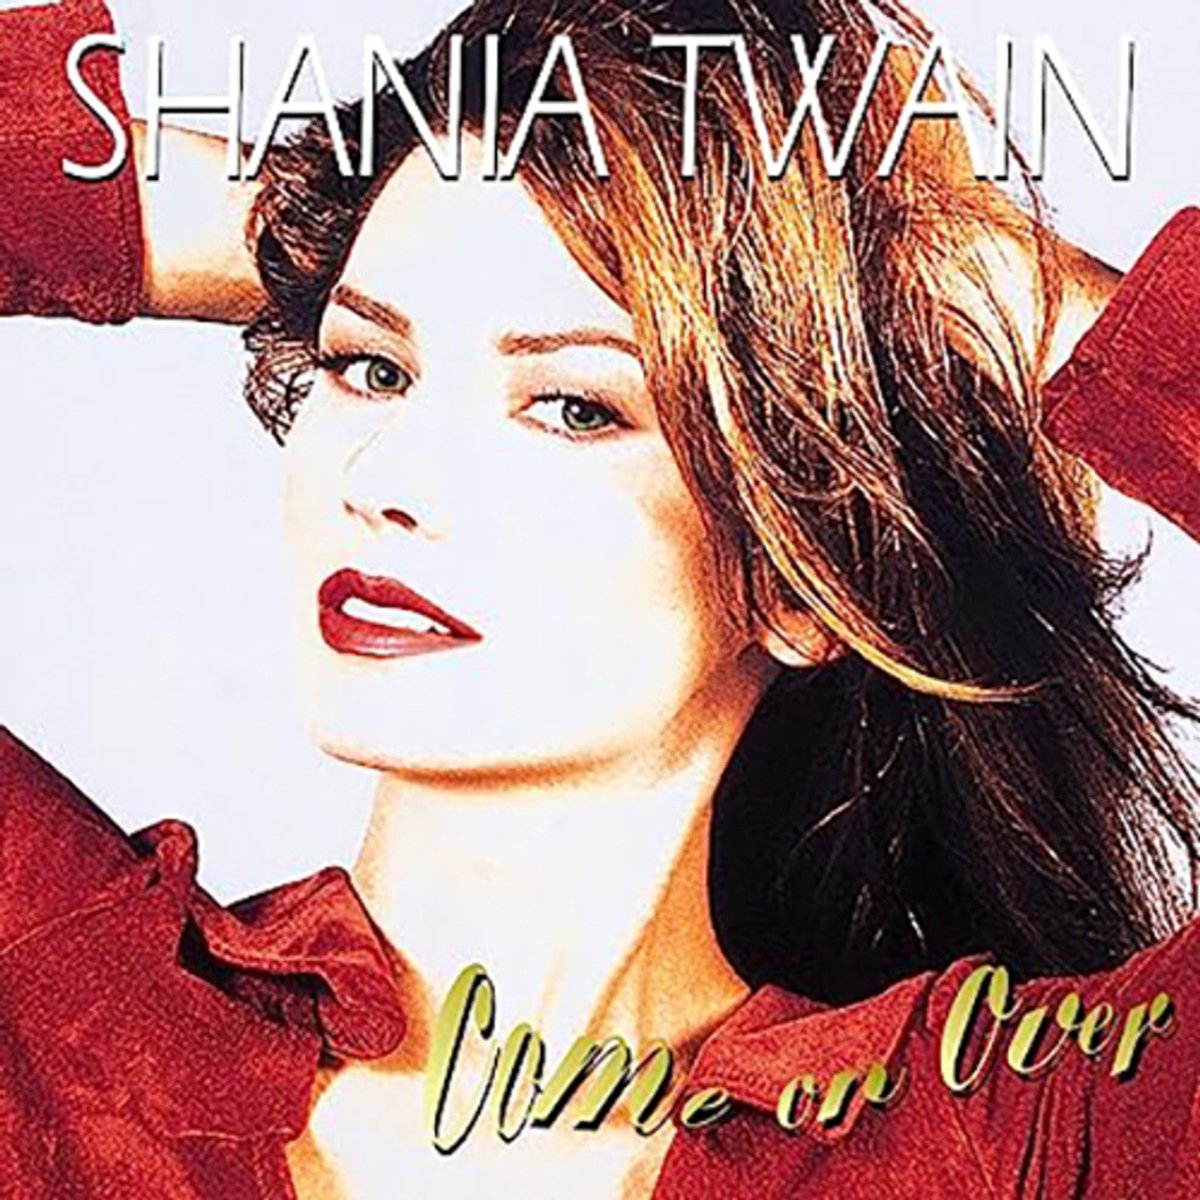 Shania Twain - Come On Over (25th Anniversary Diamond Edition) Vinyl